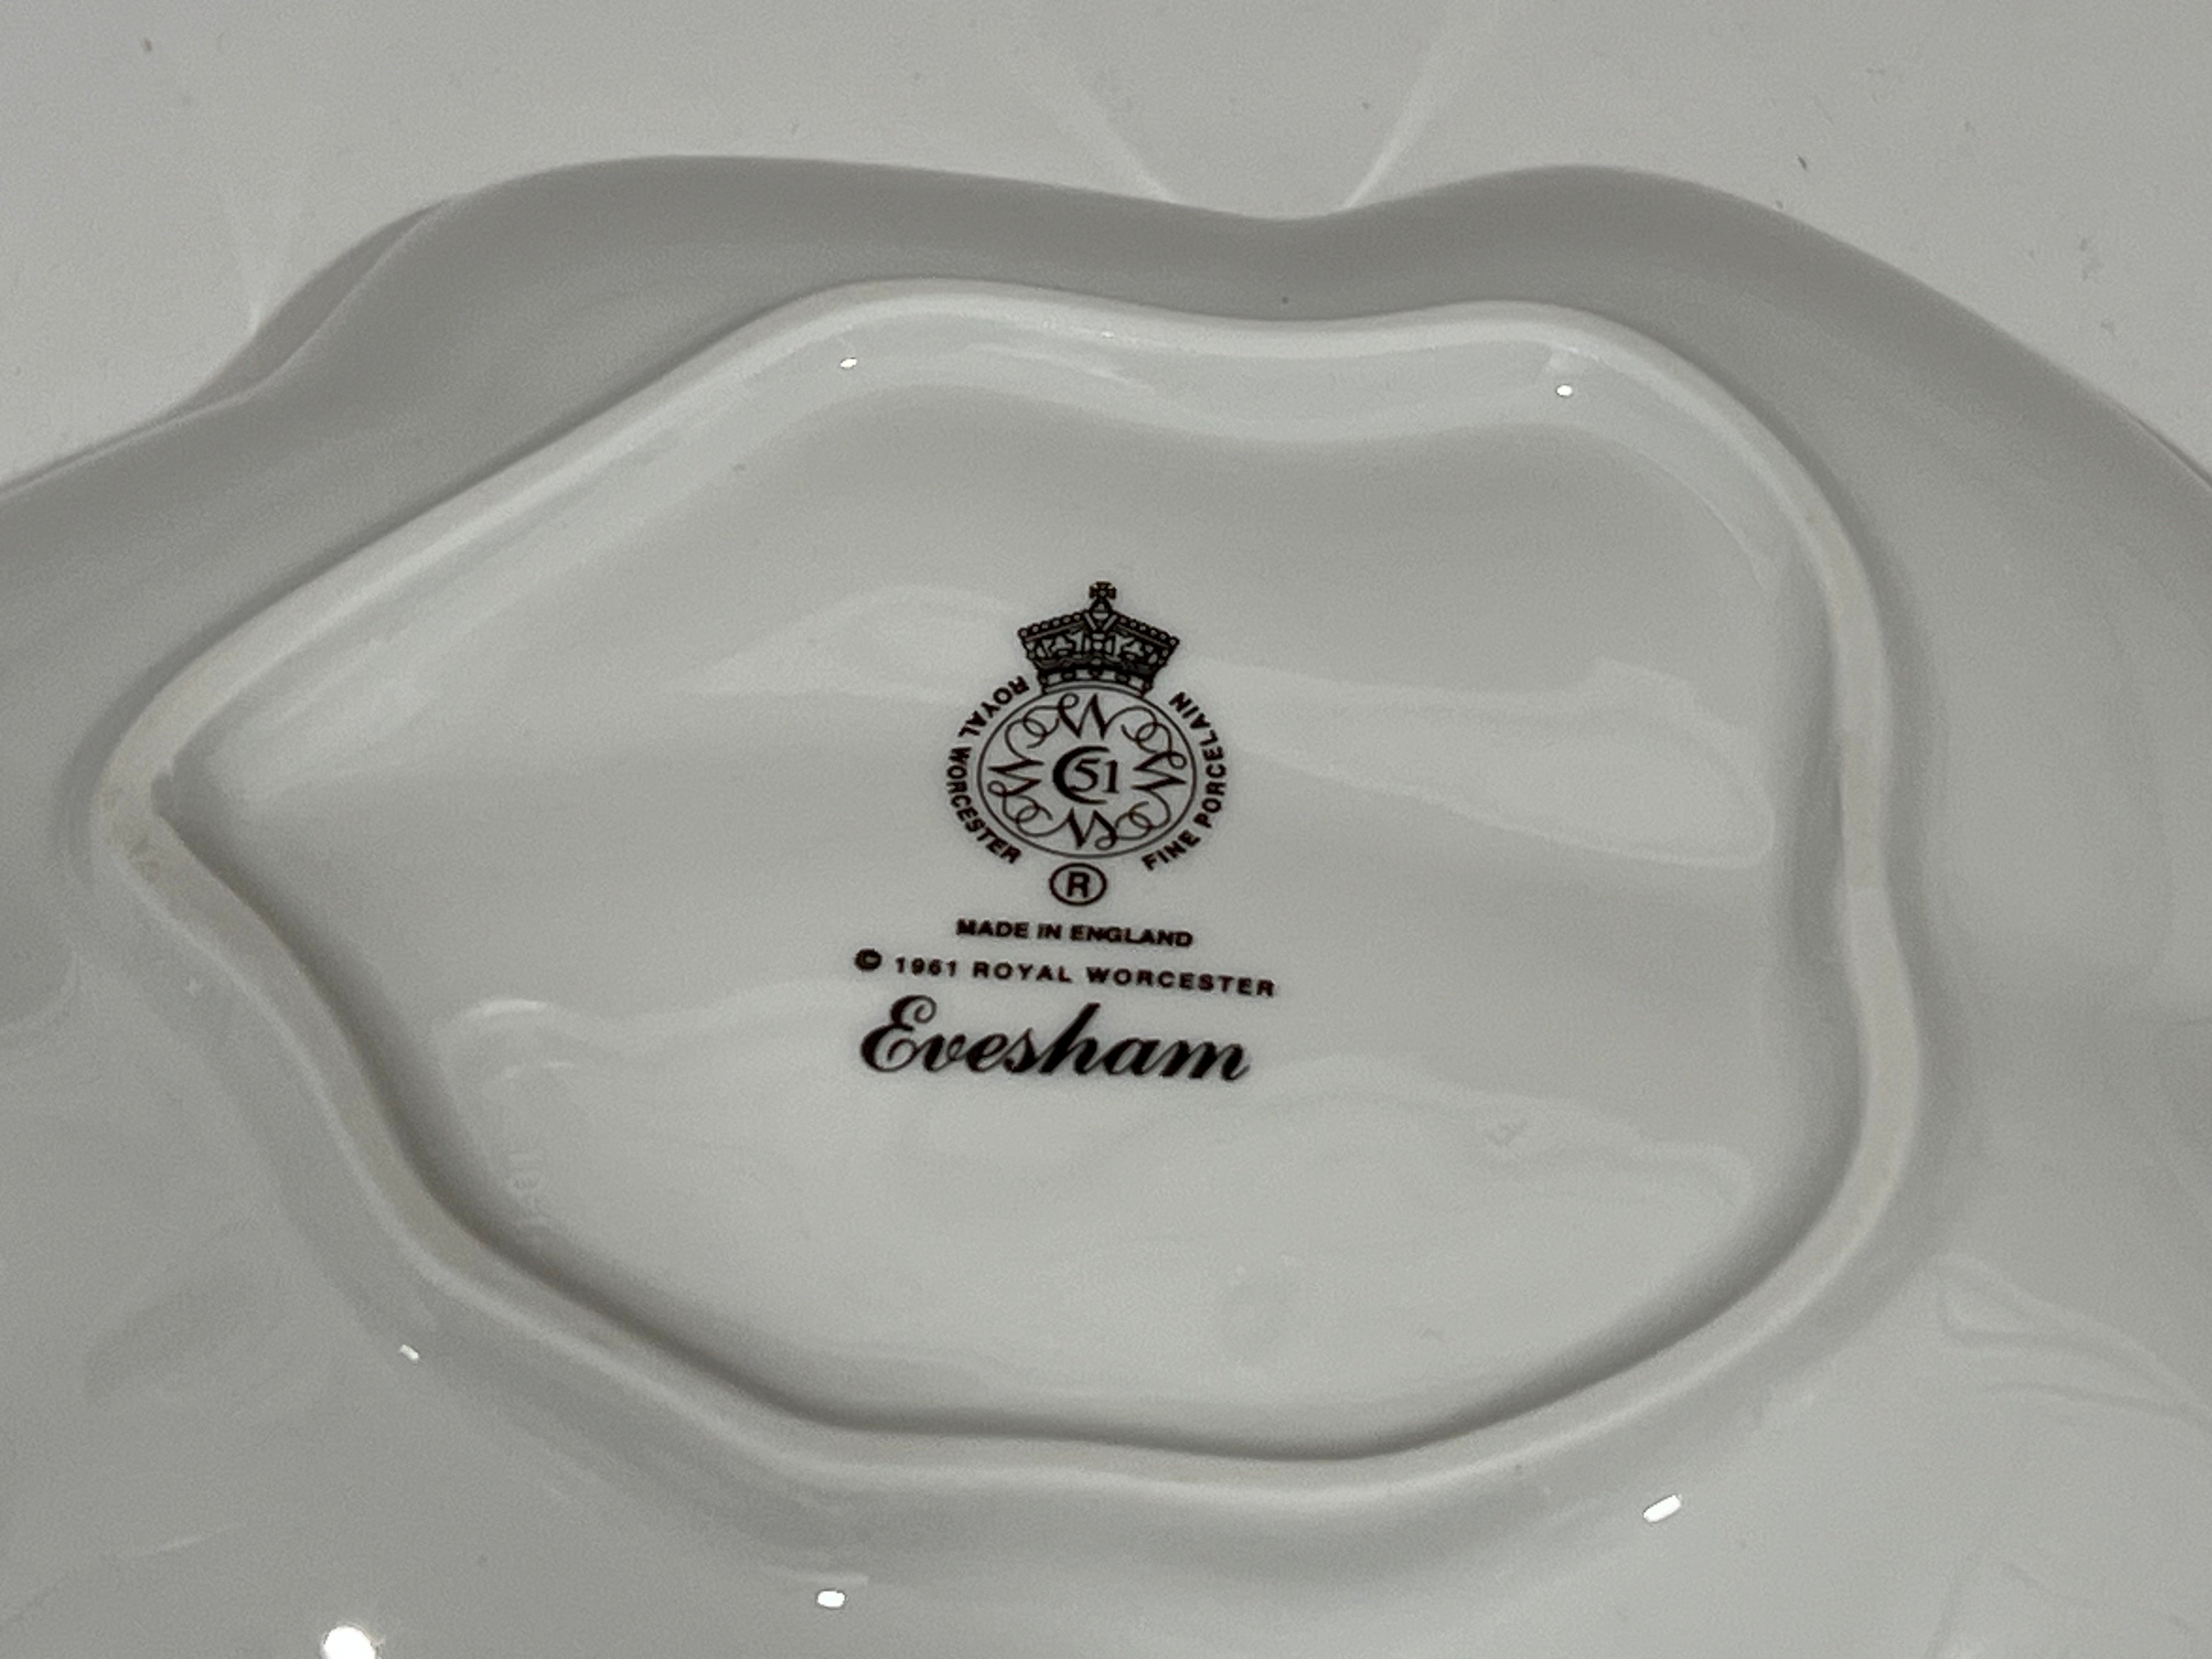 Royal Worchester Evesham Original Porcelain Fine China - Condiment Platter - Gold Trim - From England